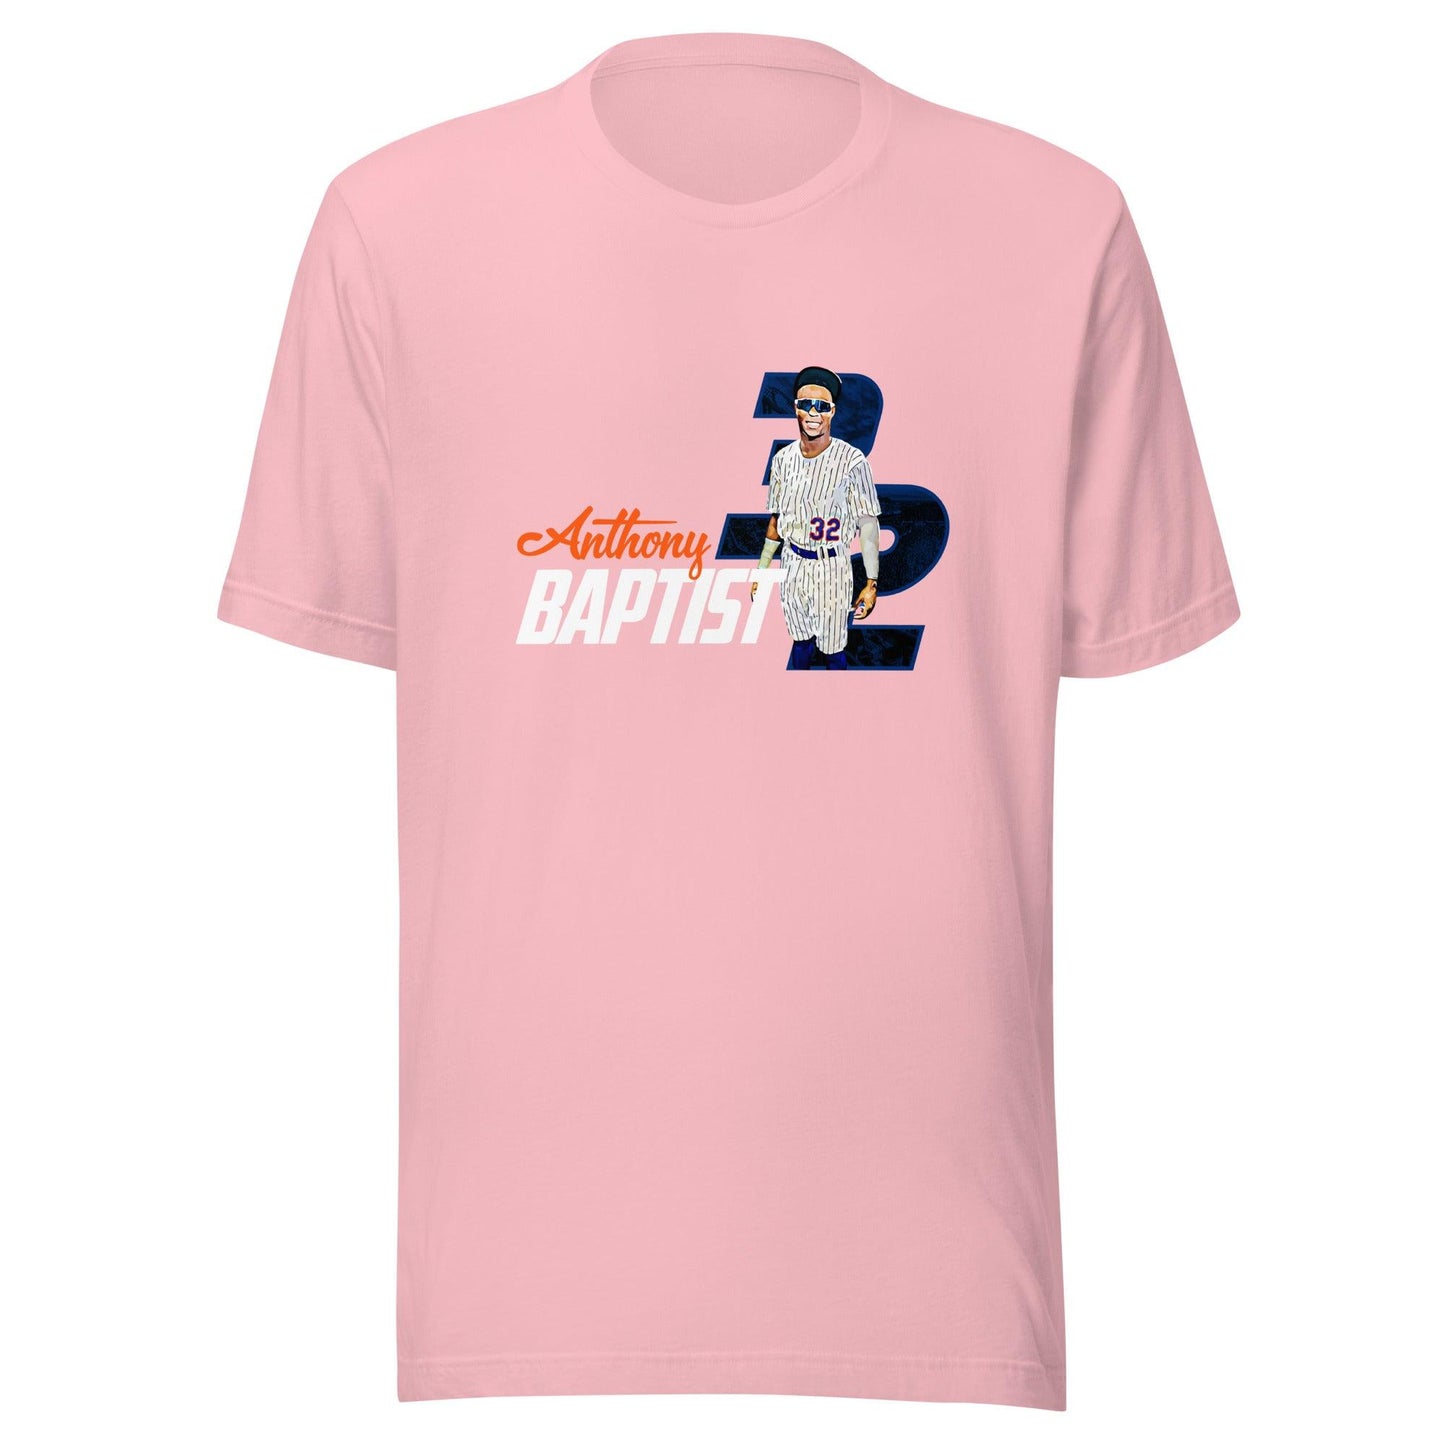 Anthony Baptist "Gameday" t-shirt - Fan Arch